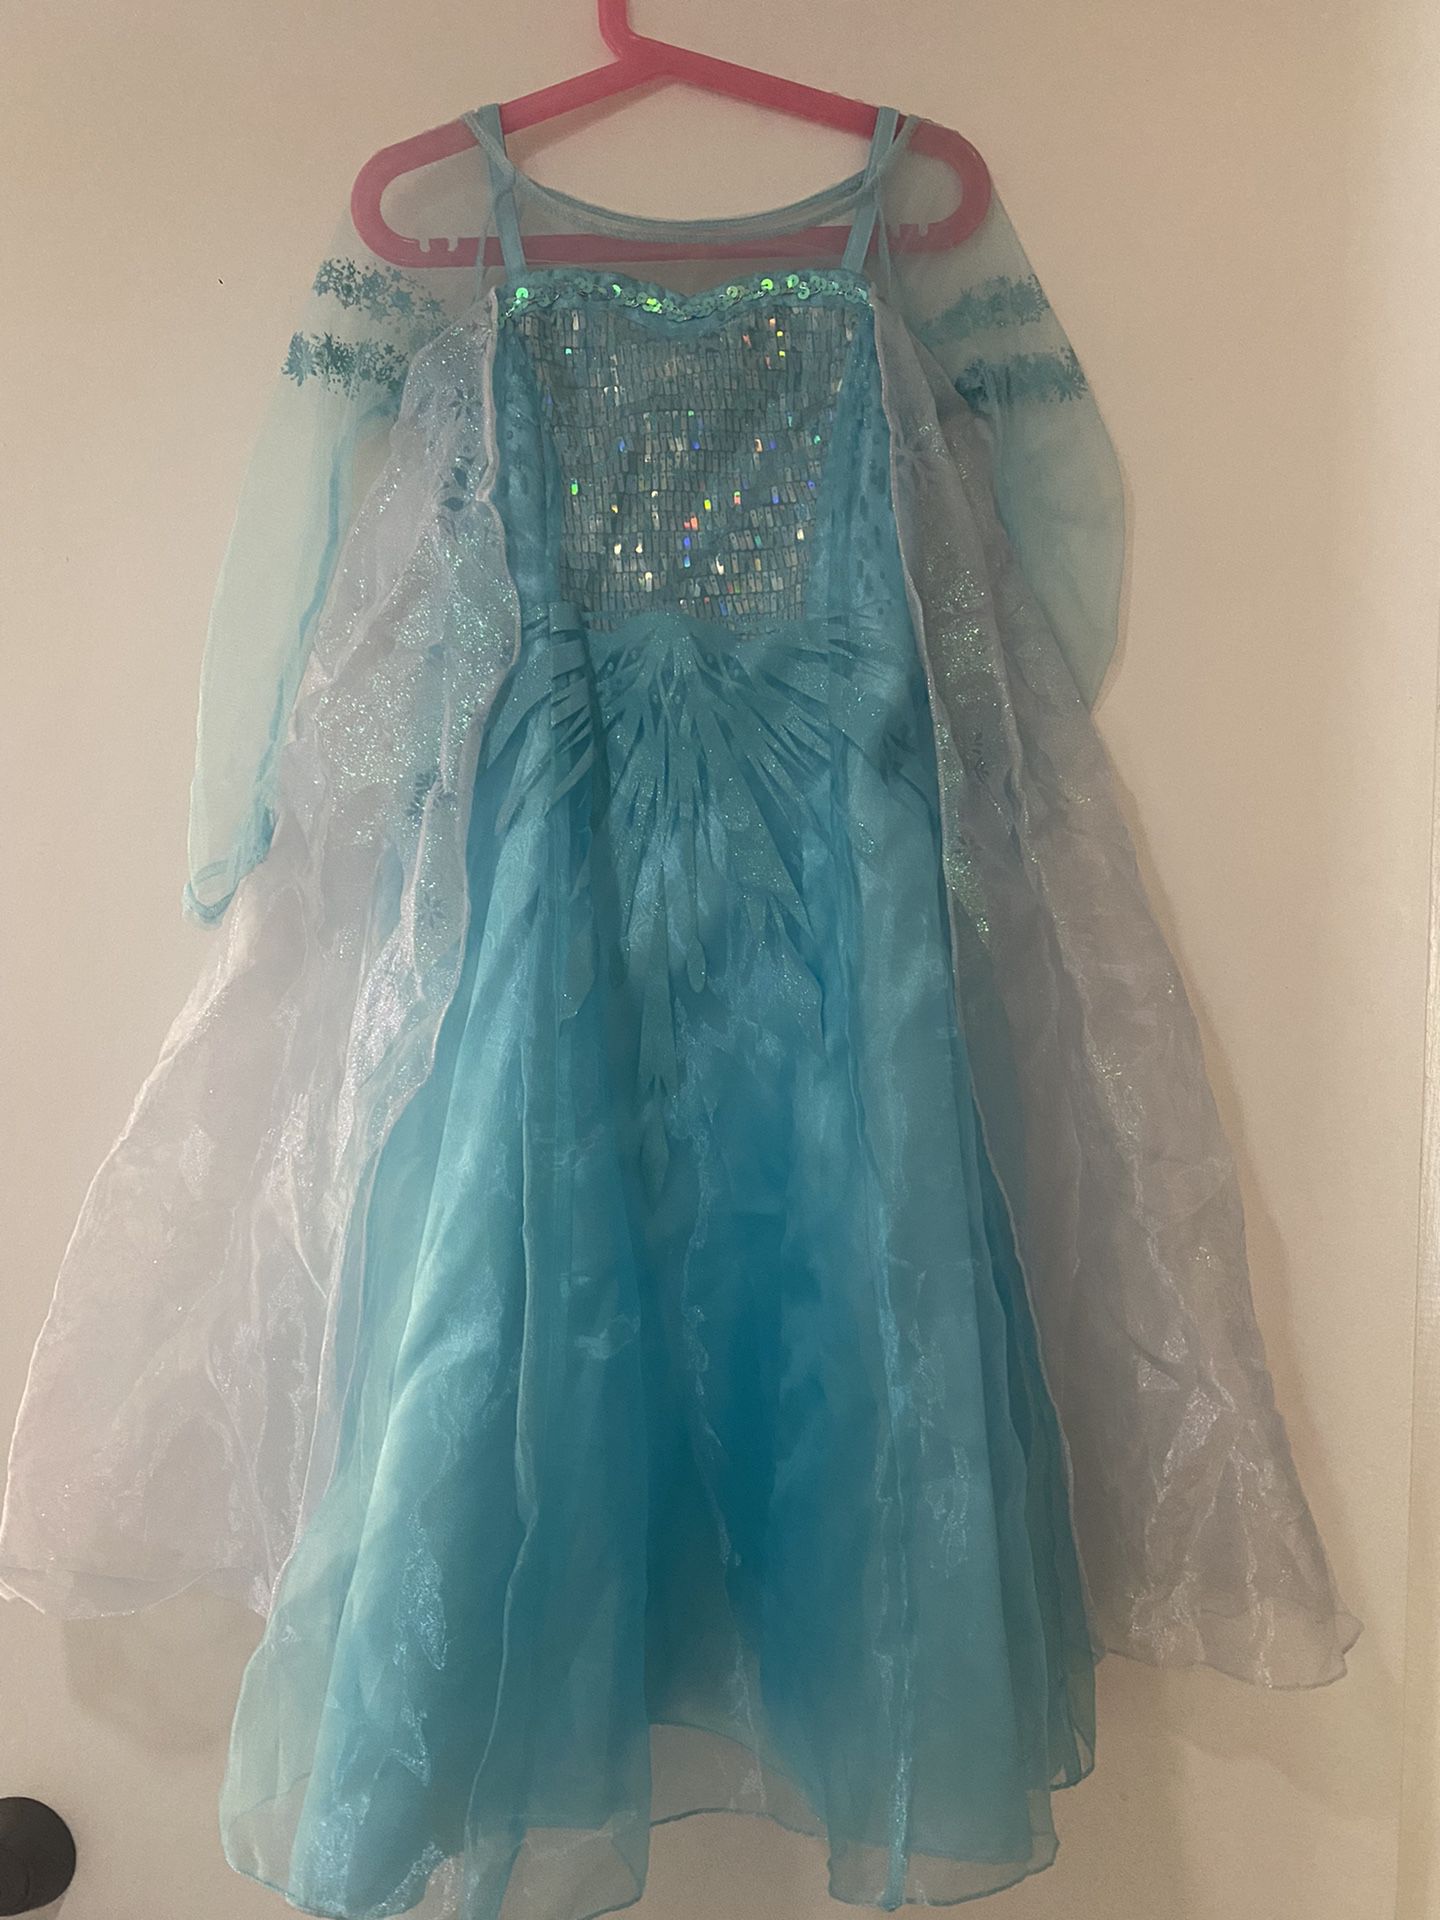 Elsa Disney dress